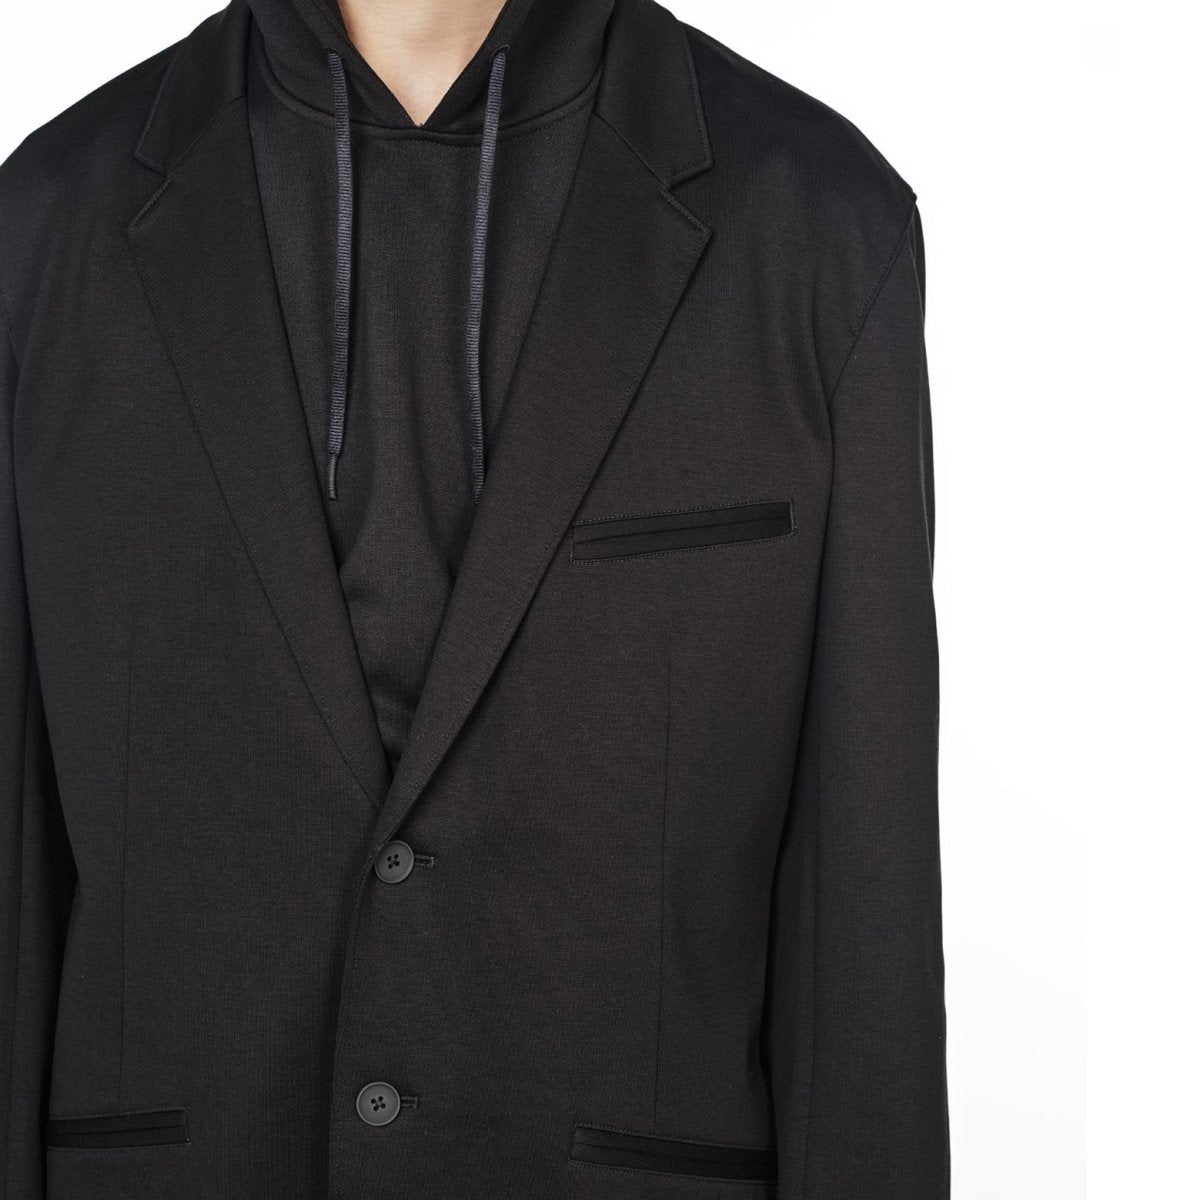 Y-3 Tailored Coat (Schwarz)  - Allike Store